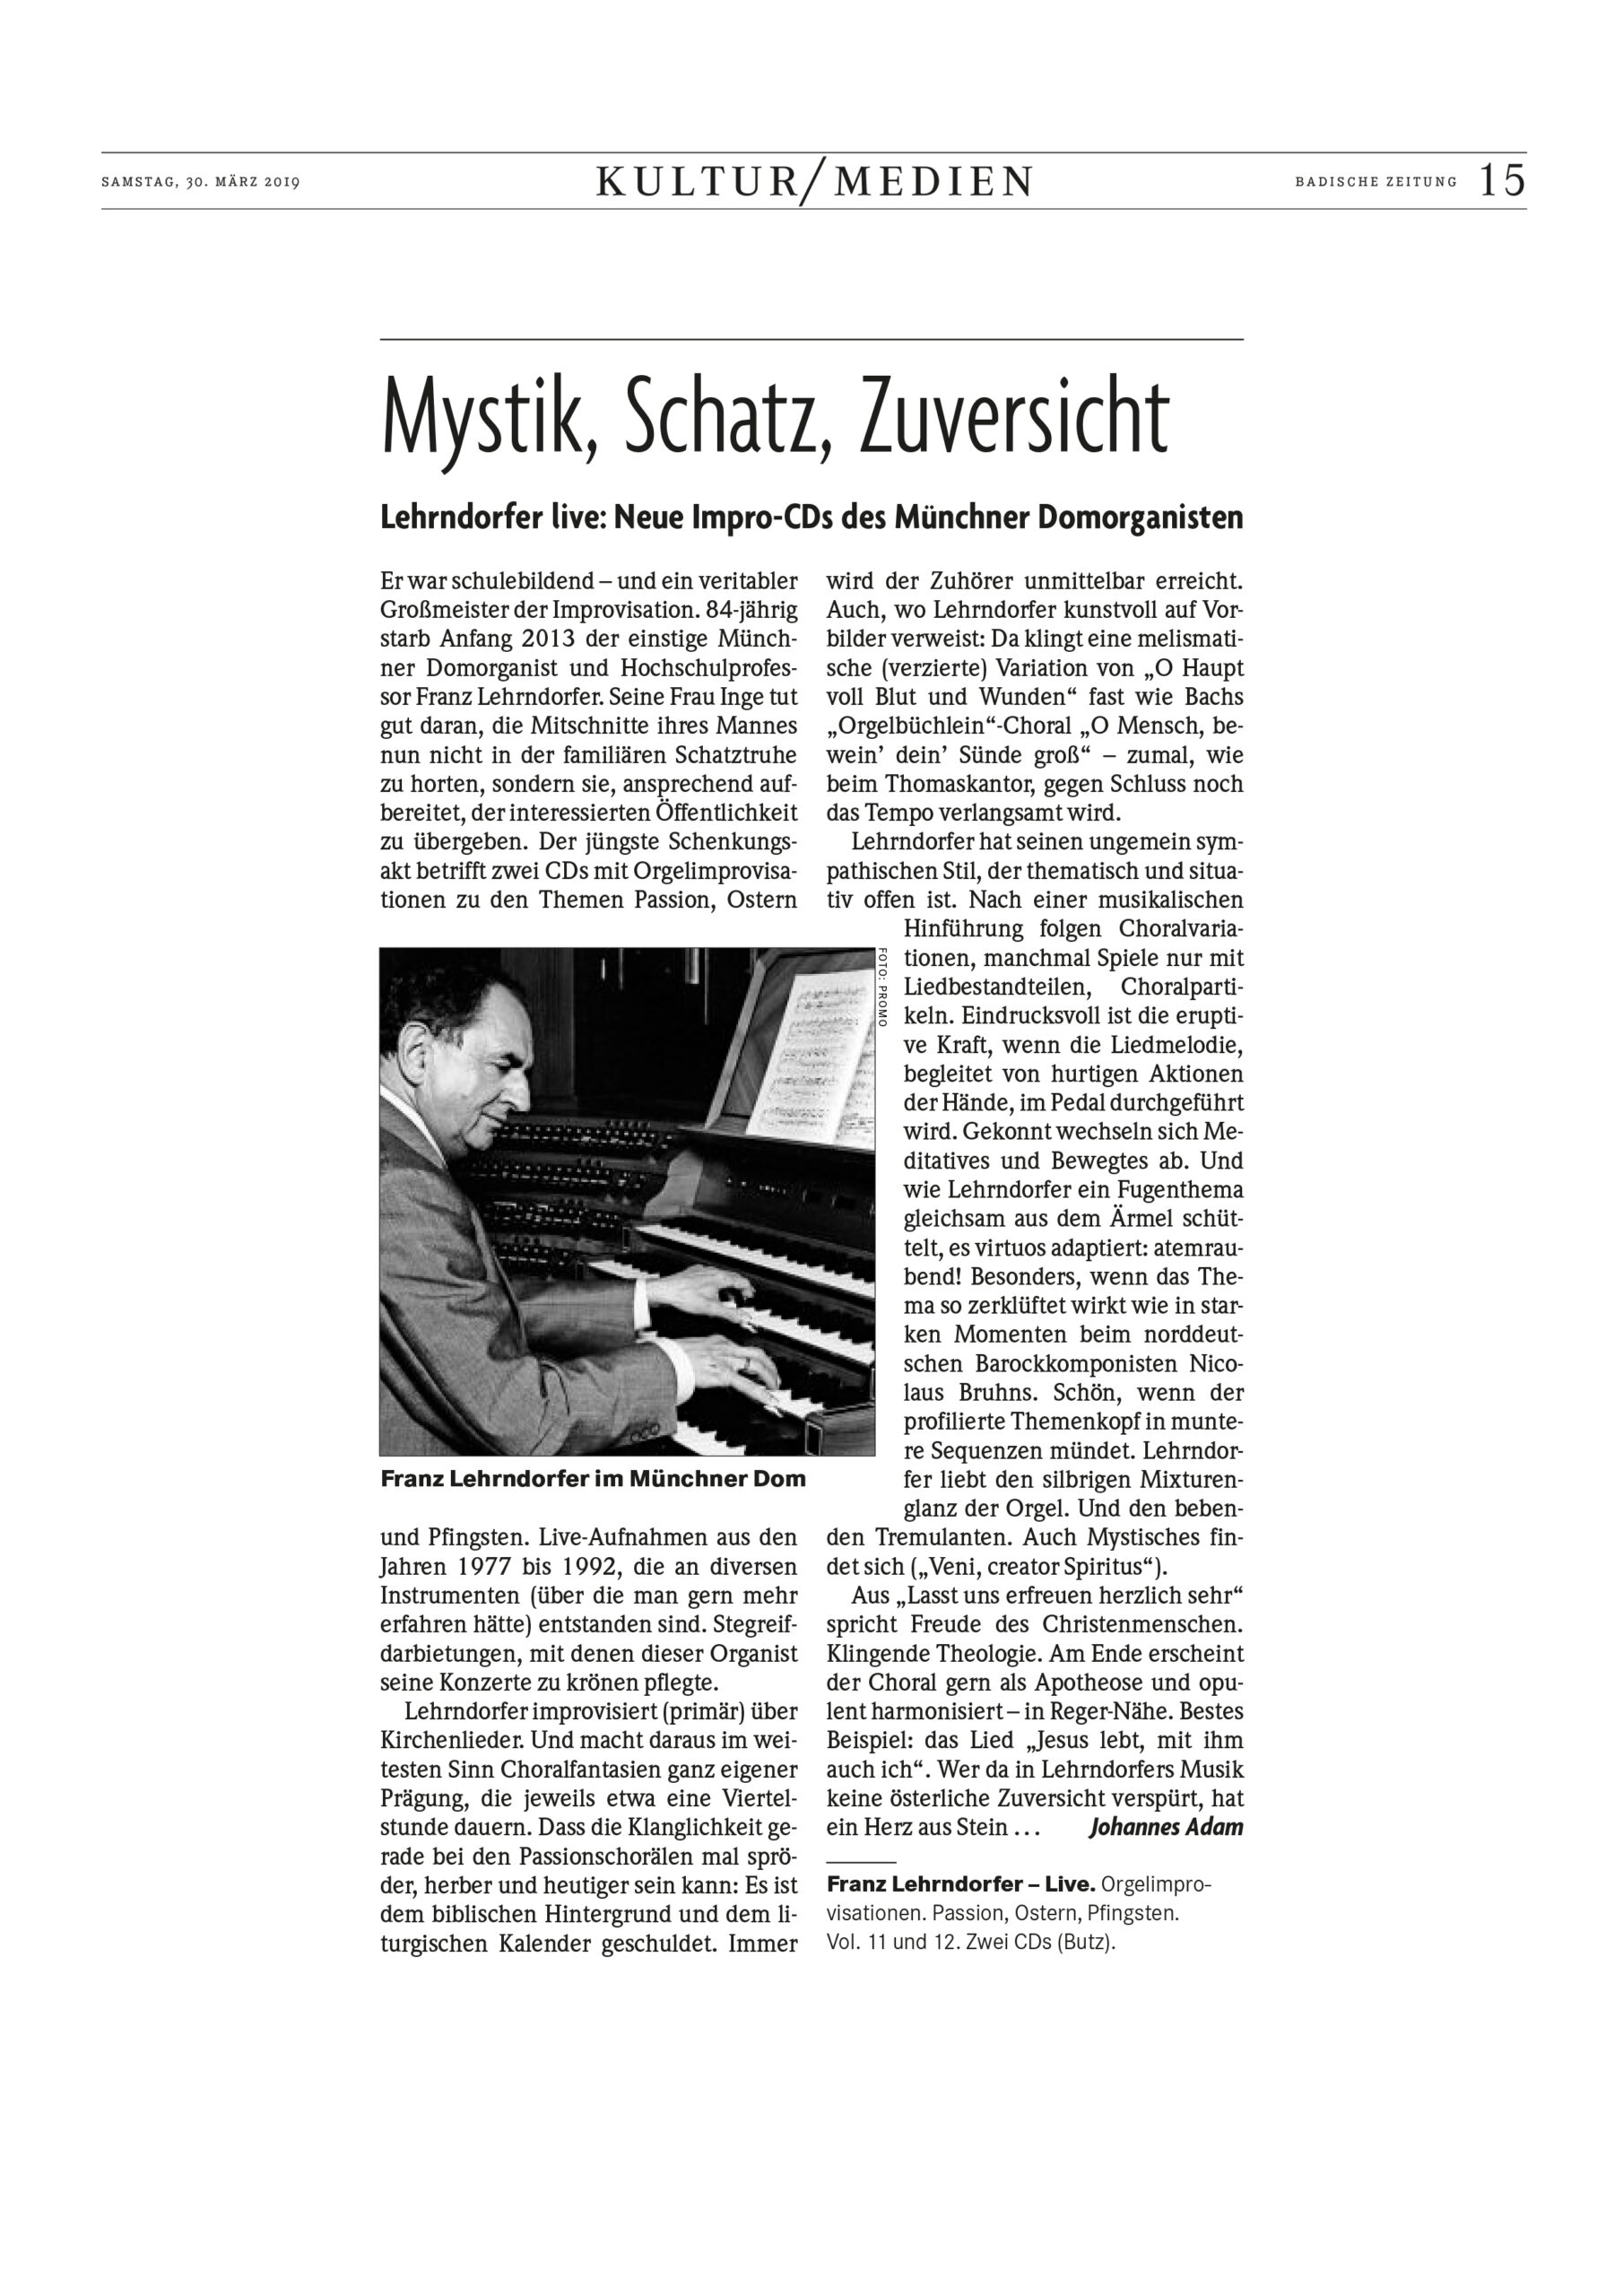 Badische-Zeitung-30-03-2019-CD-Kritik-Vol11-12